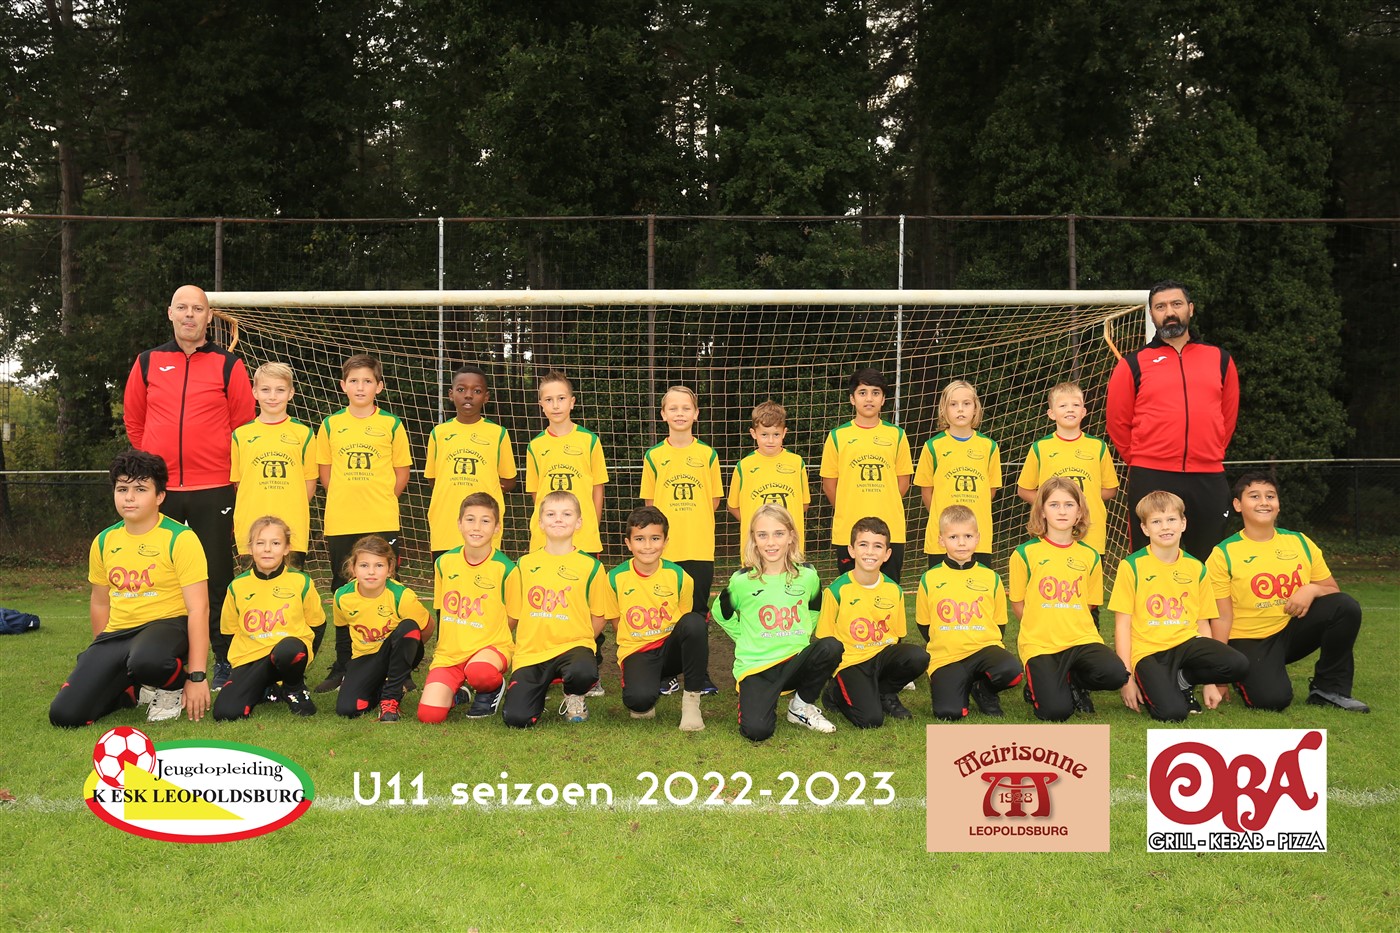 U11 ploegfoto jeugdopleiding voetbalclub K.ESK Leopoldsburg